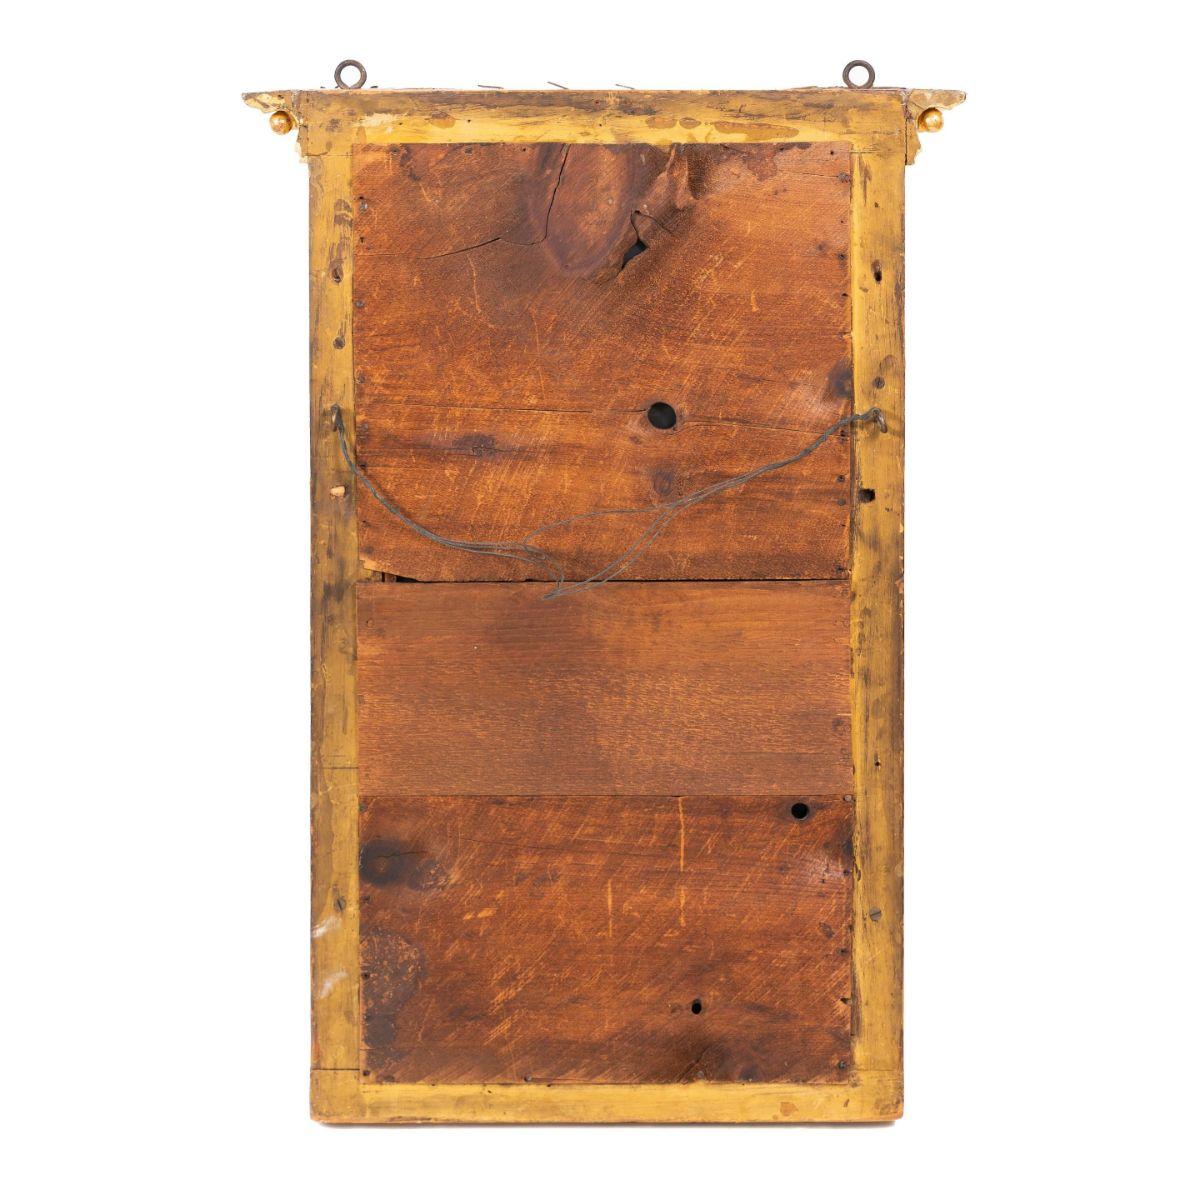 Vergoldeter Tabernakel-Pfeilerspiegel, amerikanisches Neuengland, frühes 19. Jahrhundert (Sheraton) im Angebot